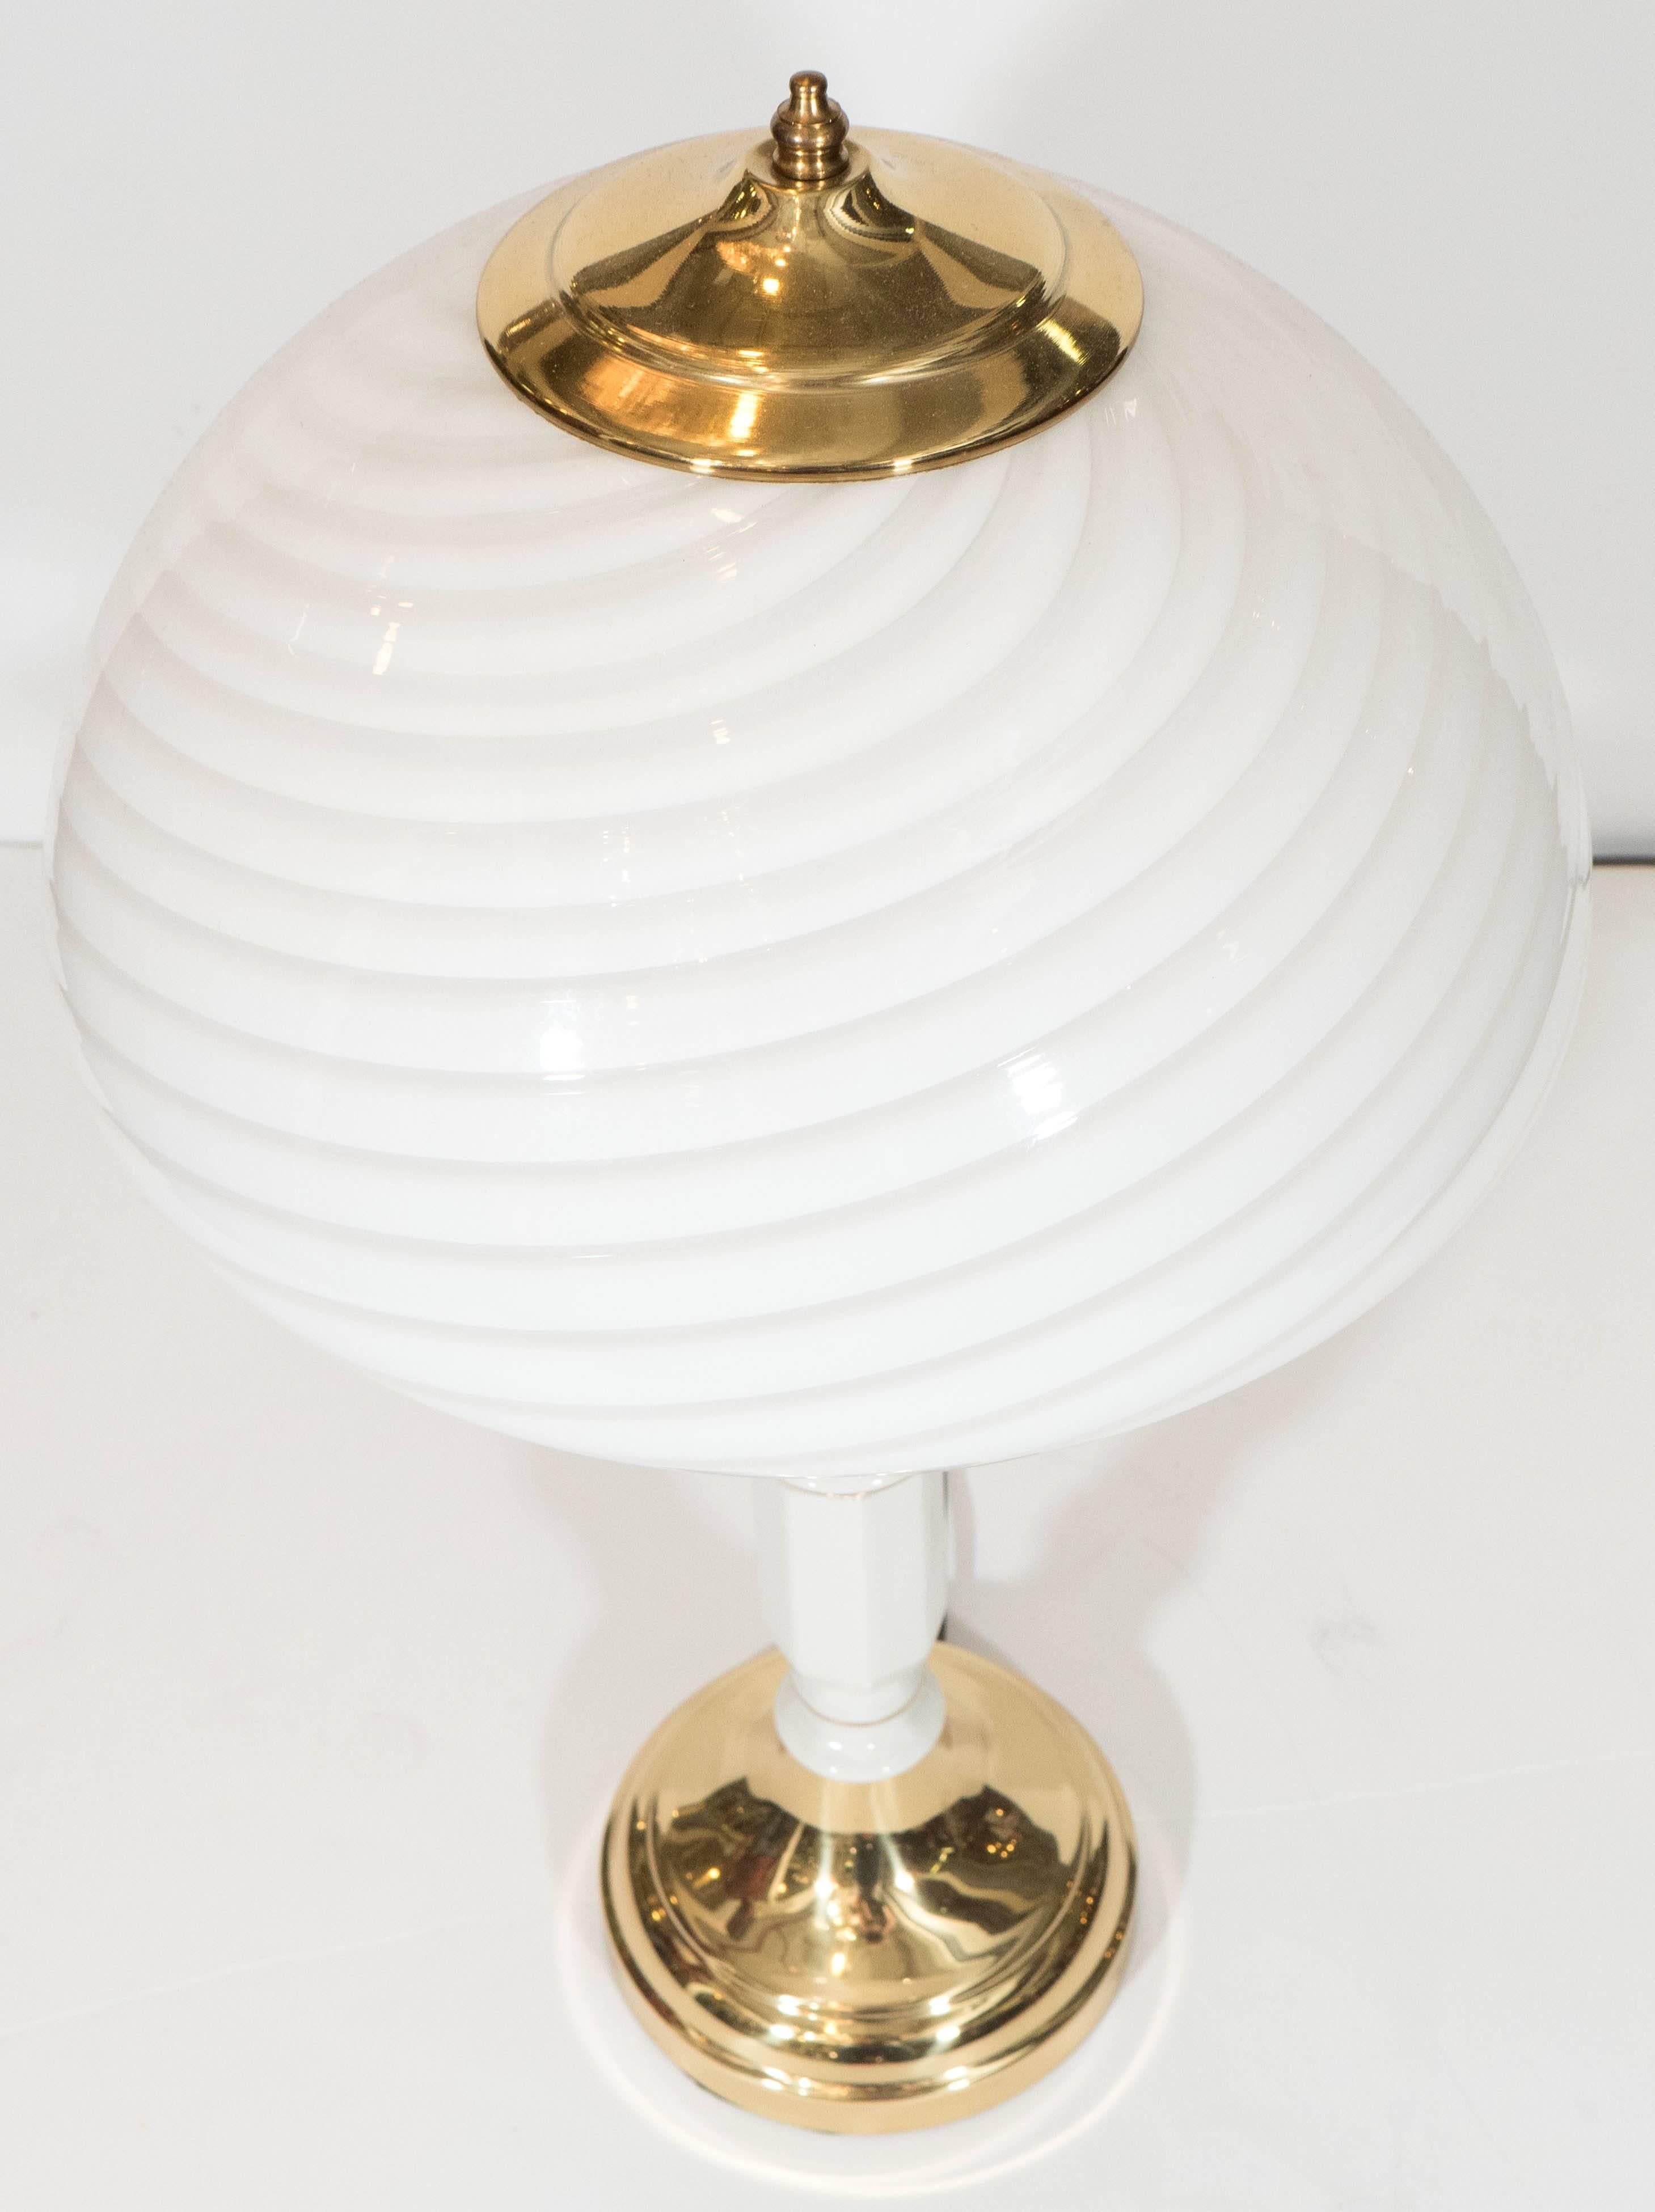 Brass Swirled Murano Glass Shade Lamp on Ceramic Candlestick Base